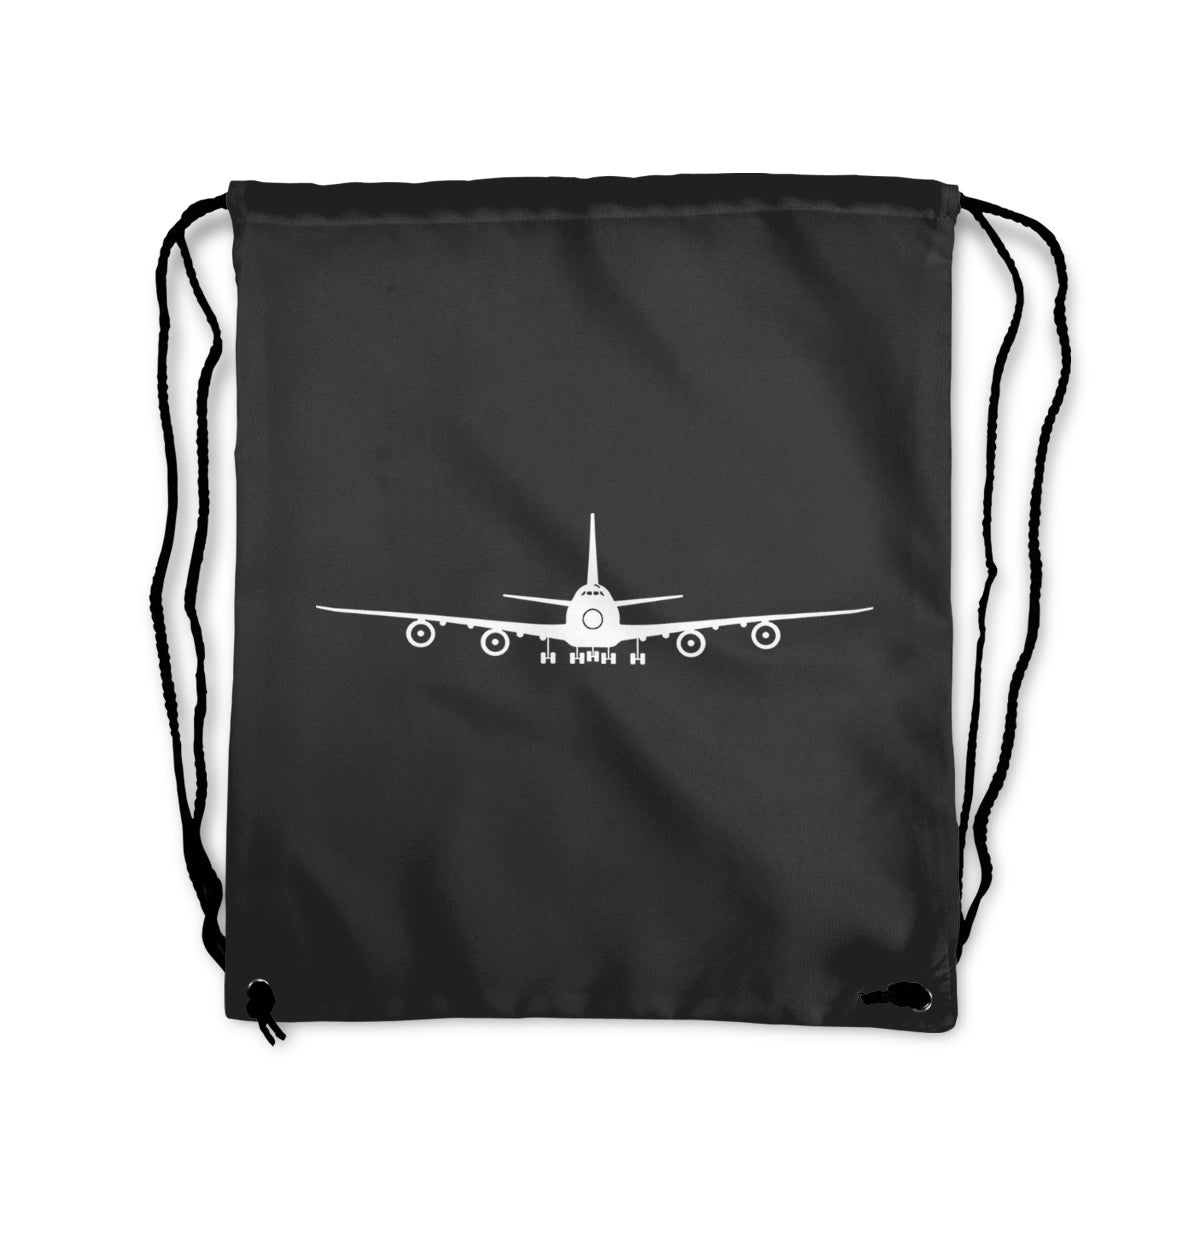 Boeing 747 Silhouette Designed Drawstring Bags